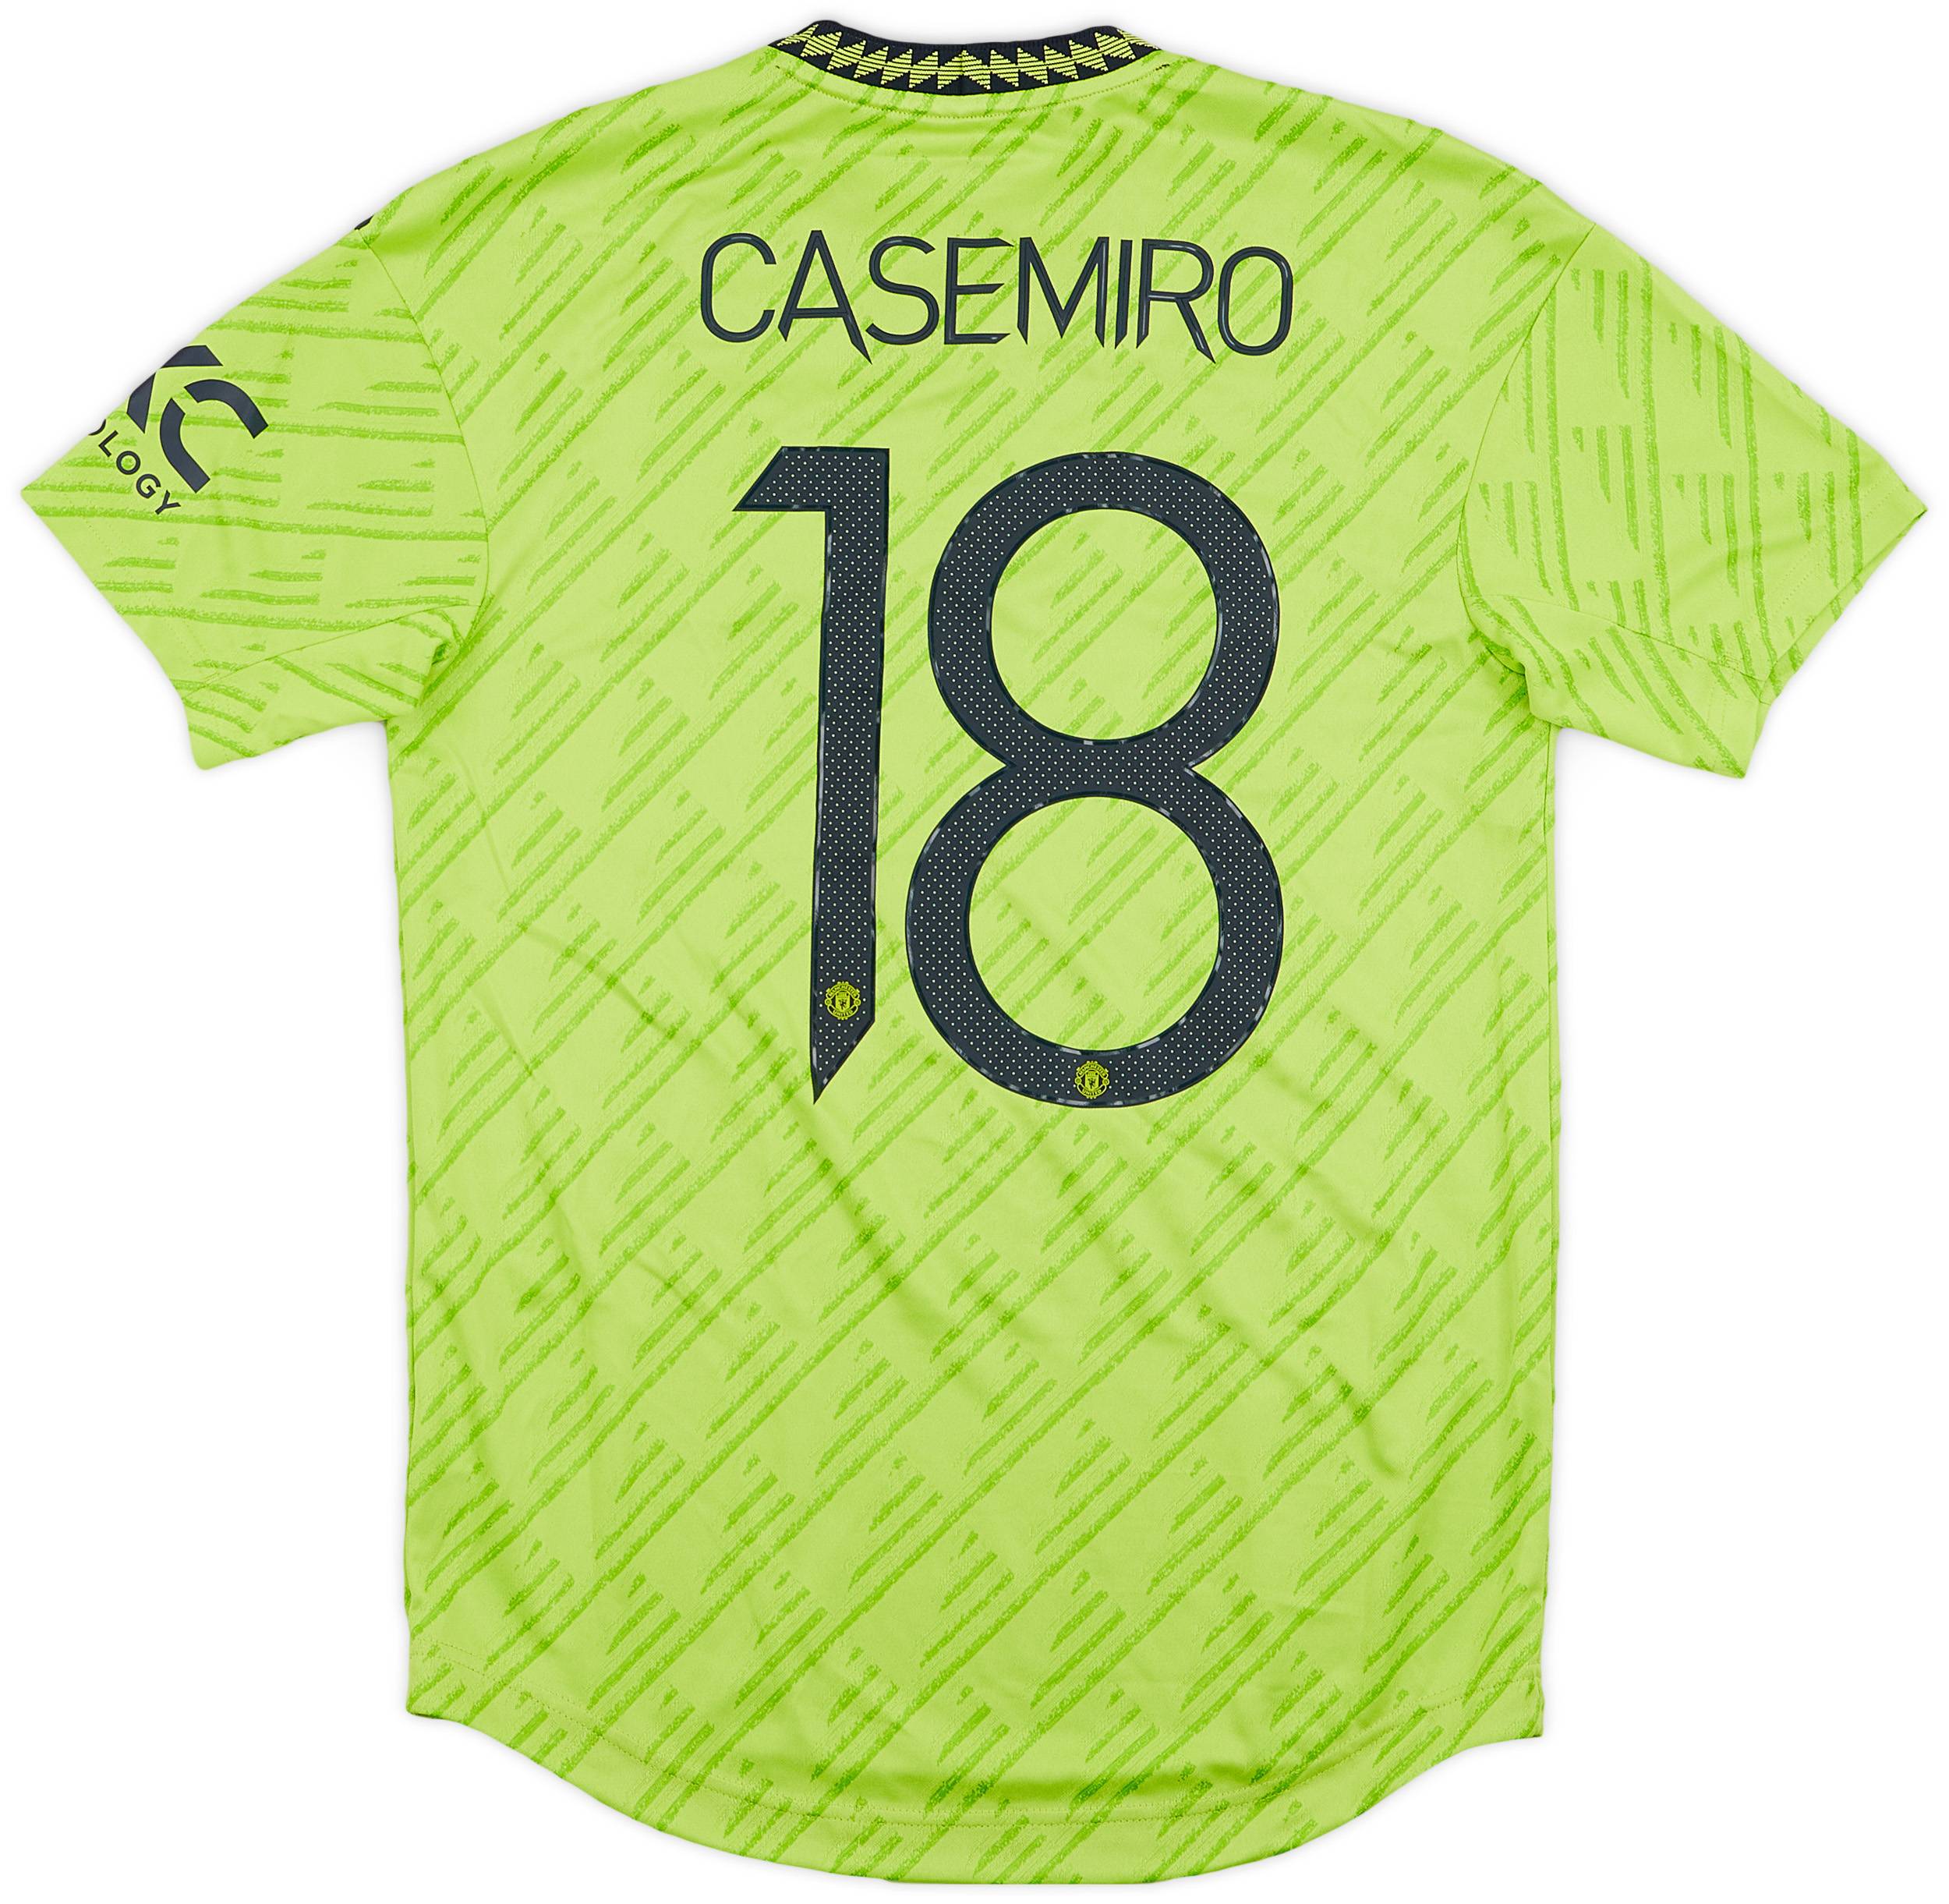 2022-23 Manchester United Authentic Third Casemiro #18 (M)